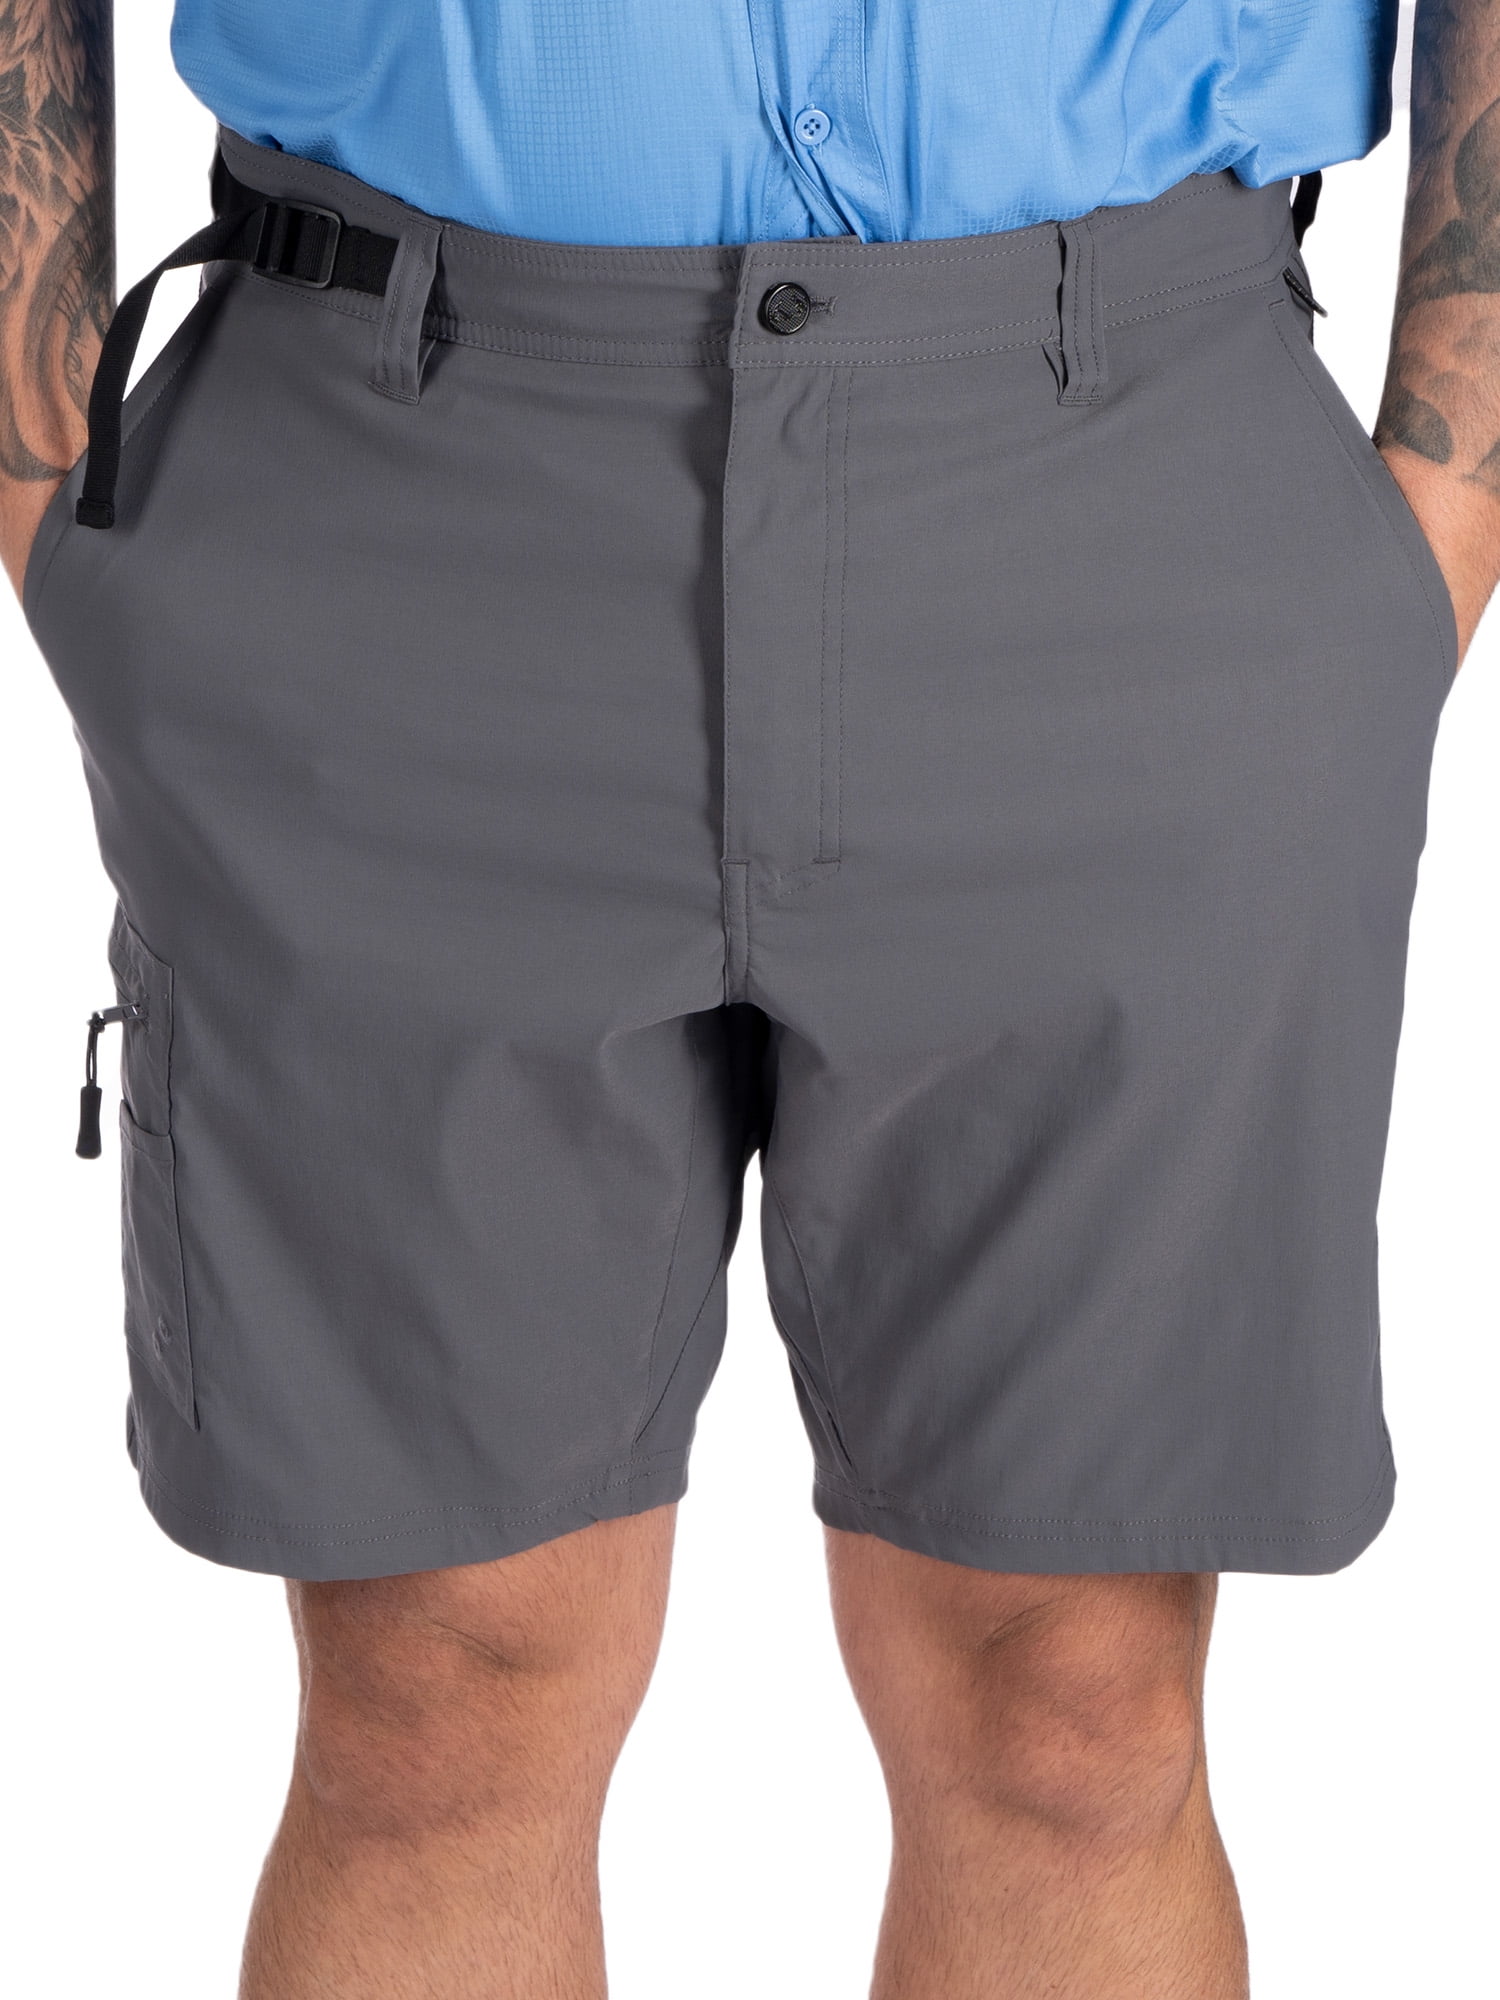 Realtree Men's Hybrid Fishing Shorts, Athletic Performance Short Pants in Charcoal, Sizes S-3xl, Size: Medium, Gray